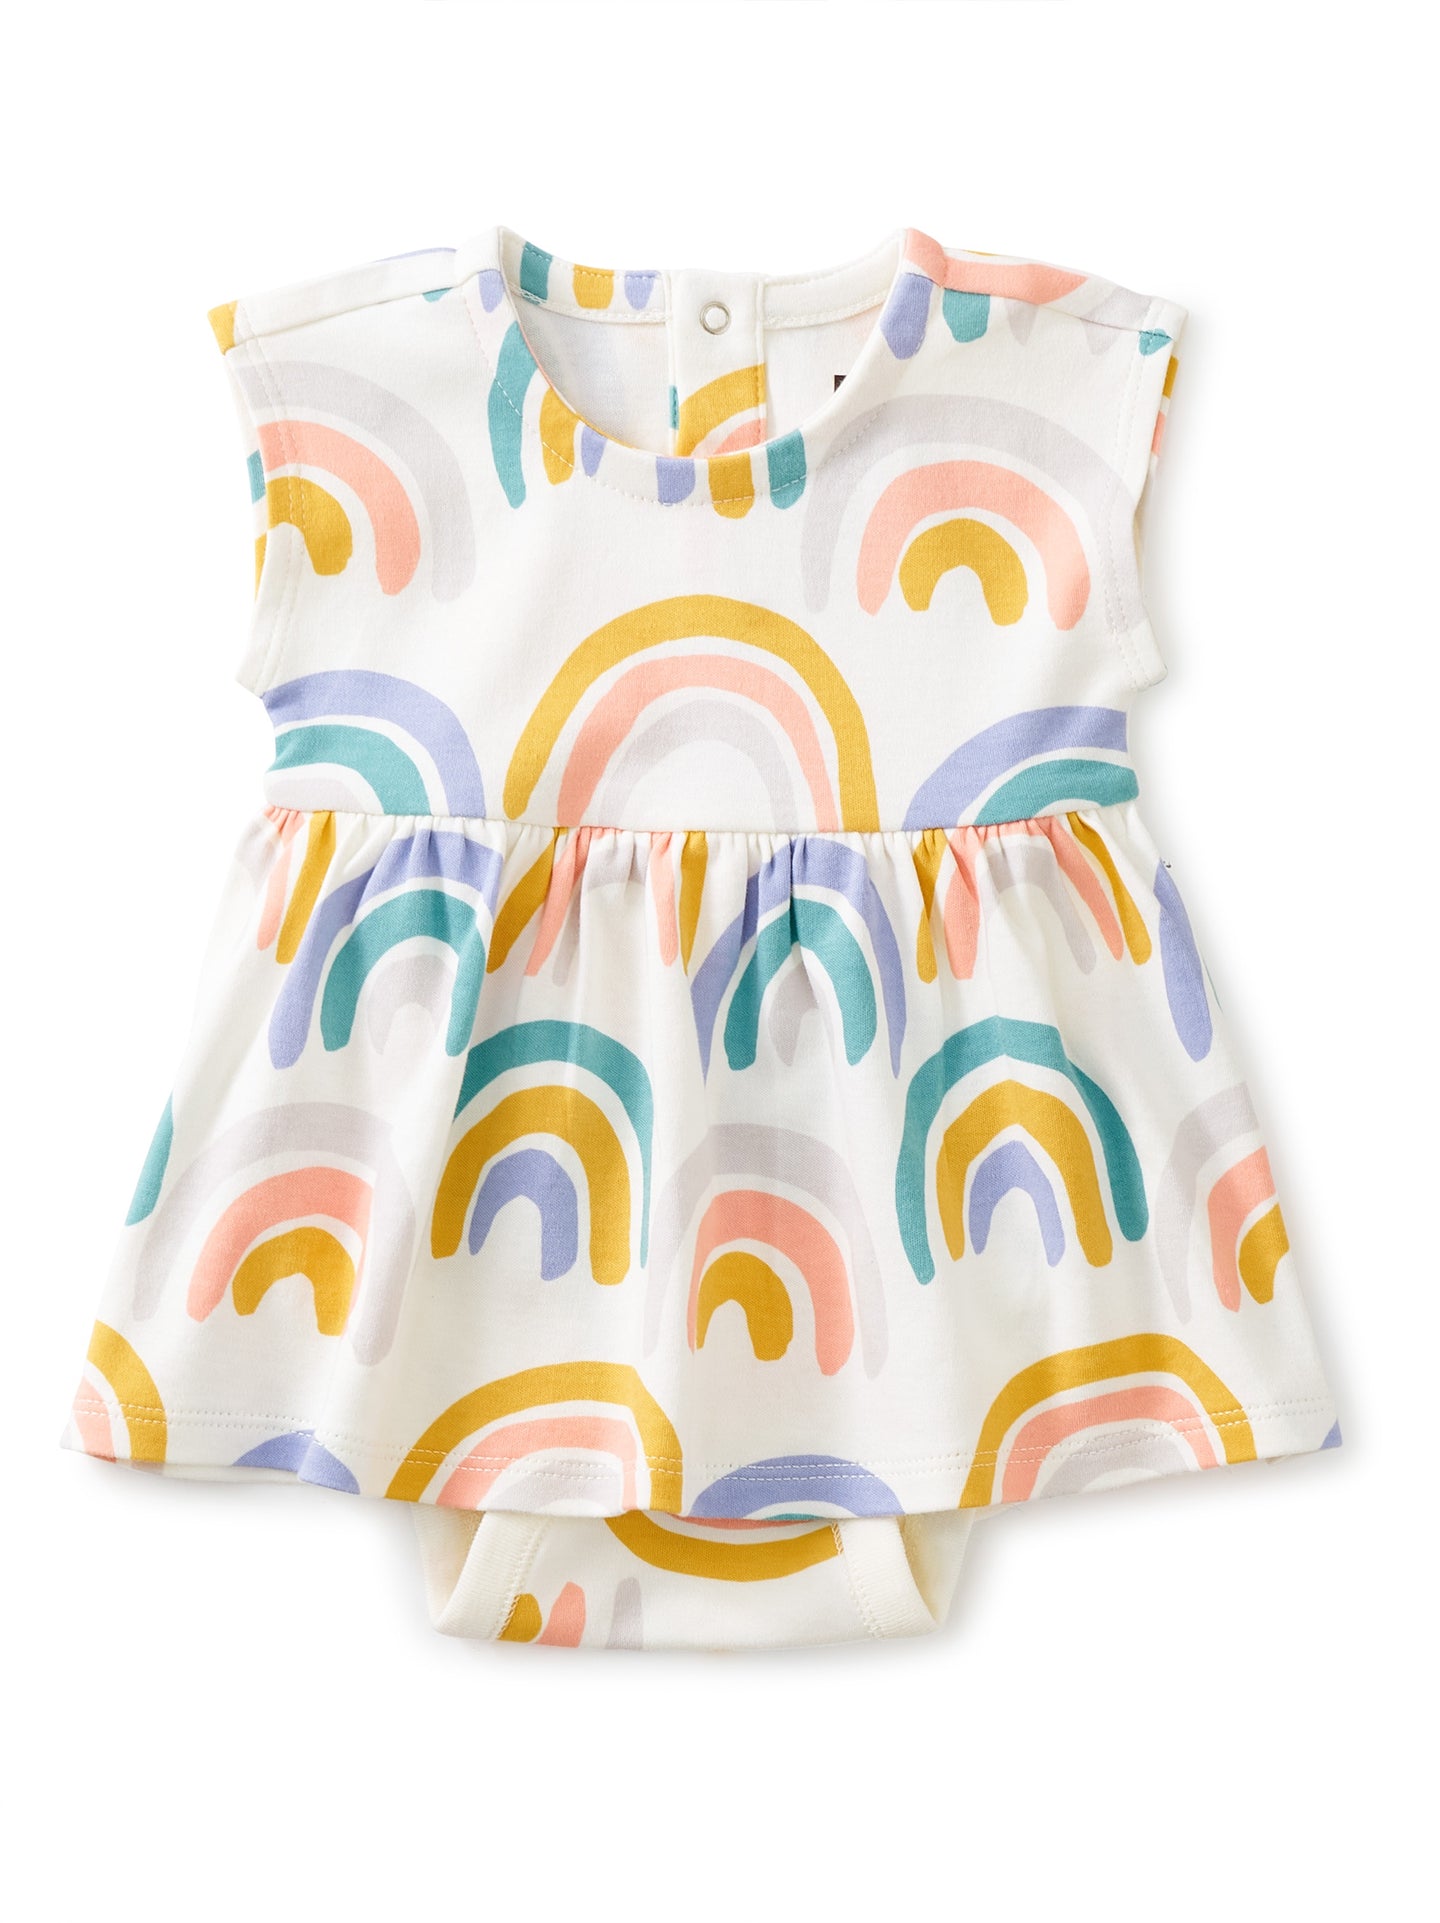 Tea Collection - Baby Bodysuit Dress - Painted Rainbow